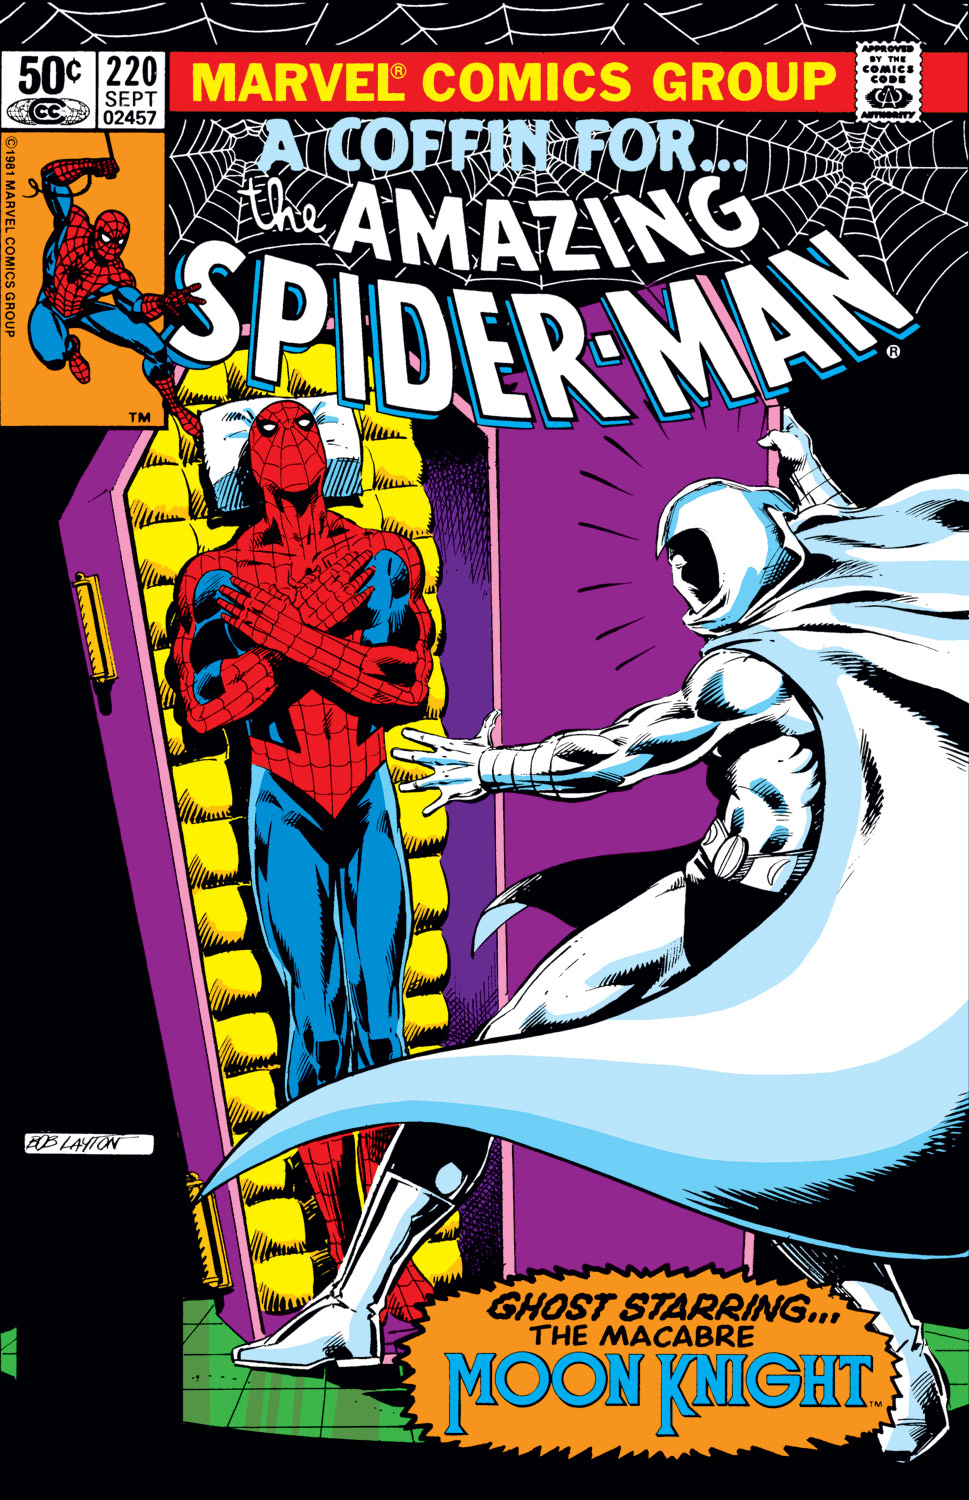 The Amazing Spider-Man (1963) #220